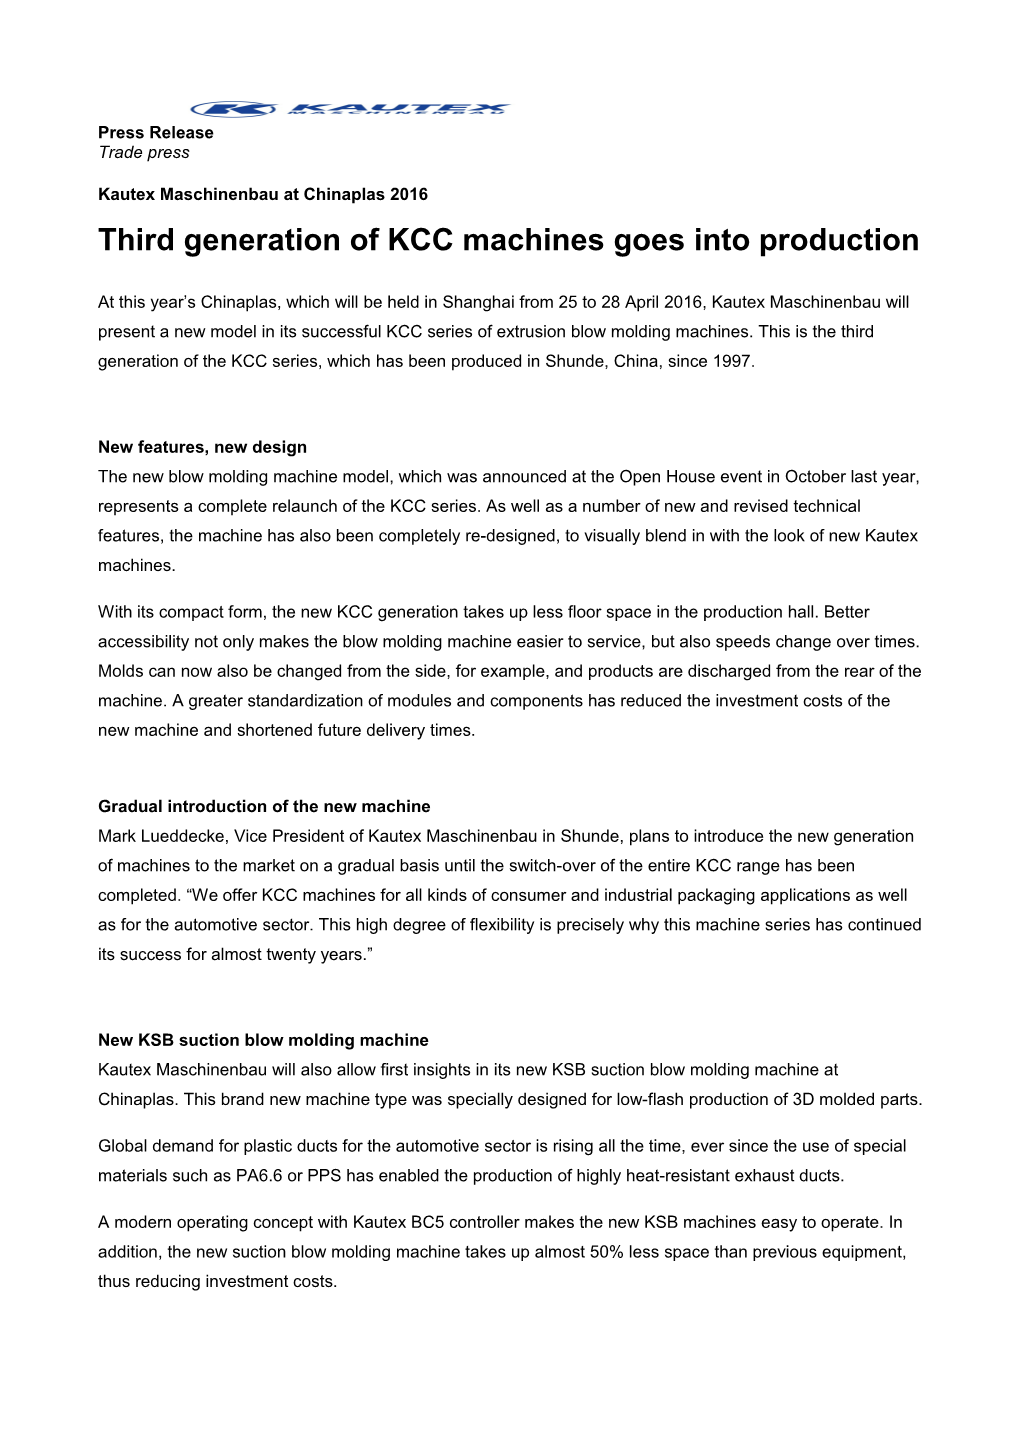 Kautex Maschinenbau at Chinaplas 2016 Third Generation of KCC Machines Goes Into Production